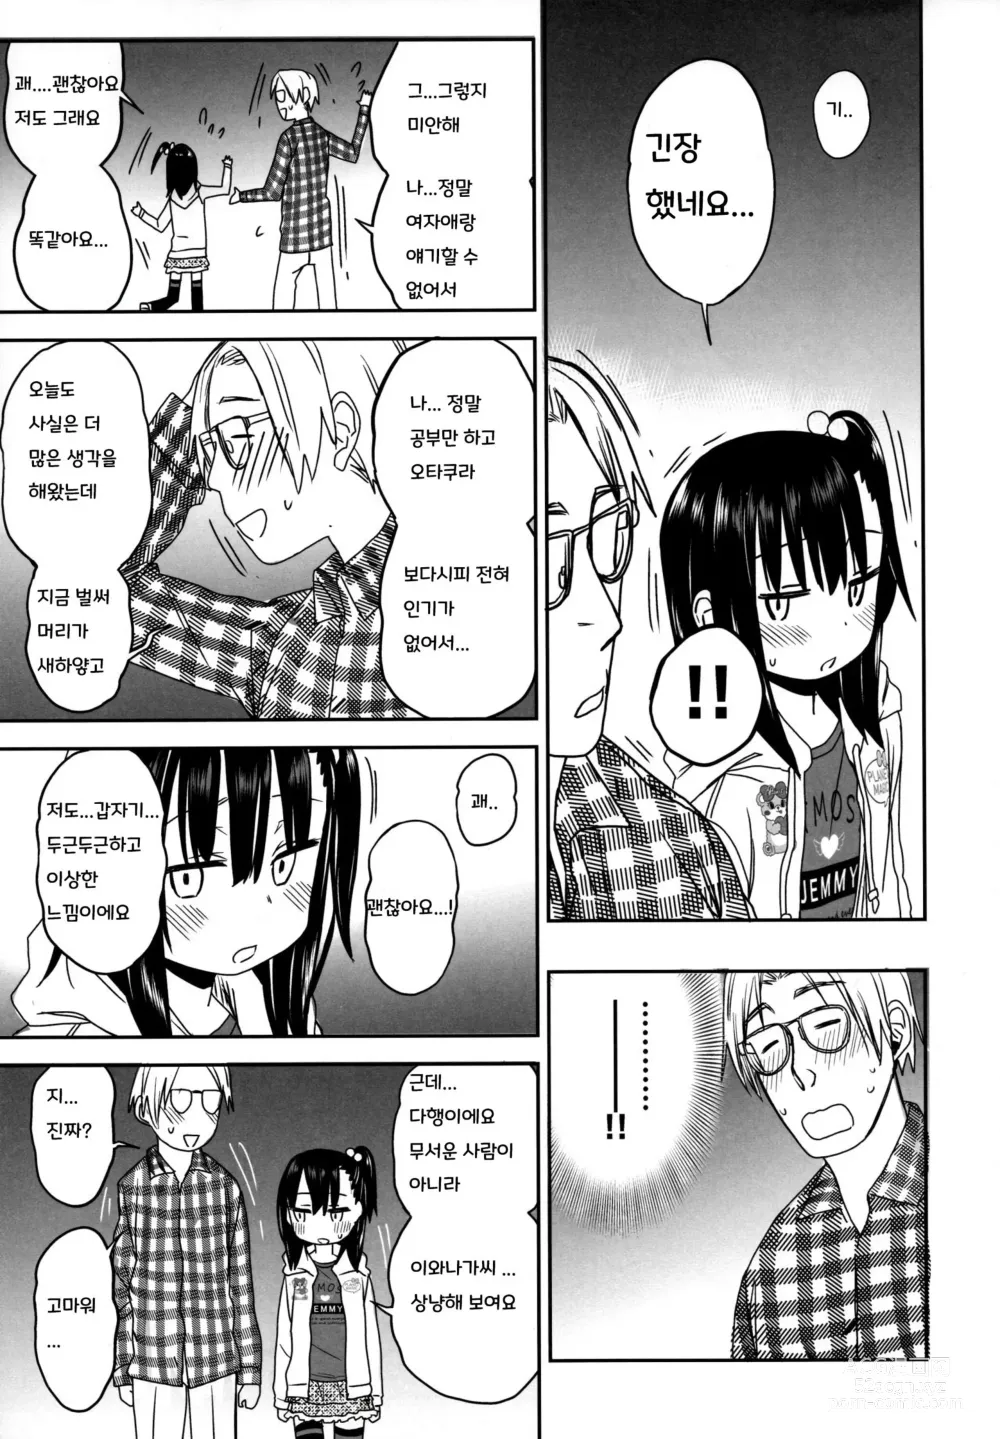 Page 13 of doujinshi Tonari no Mako-chan Season 2 Vol. 2｜이웃집 마코쨩 Season 2 Vol.2